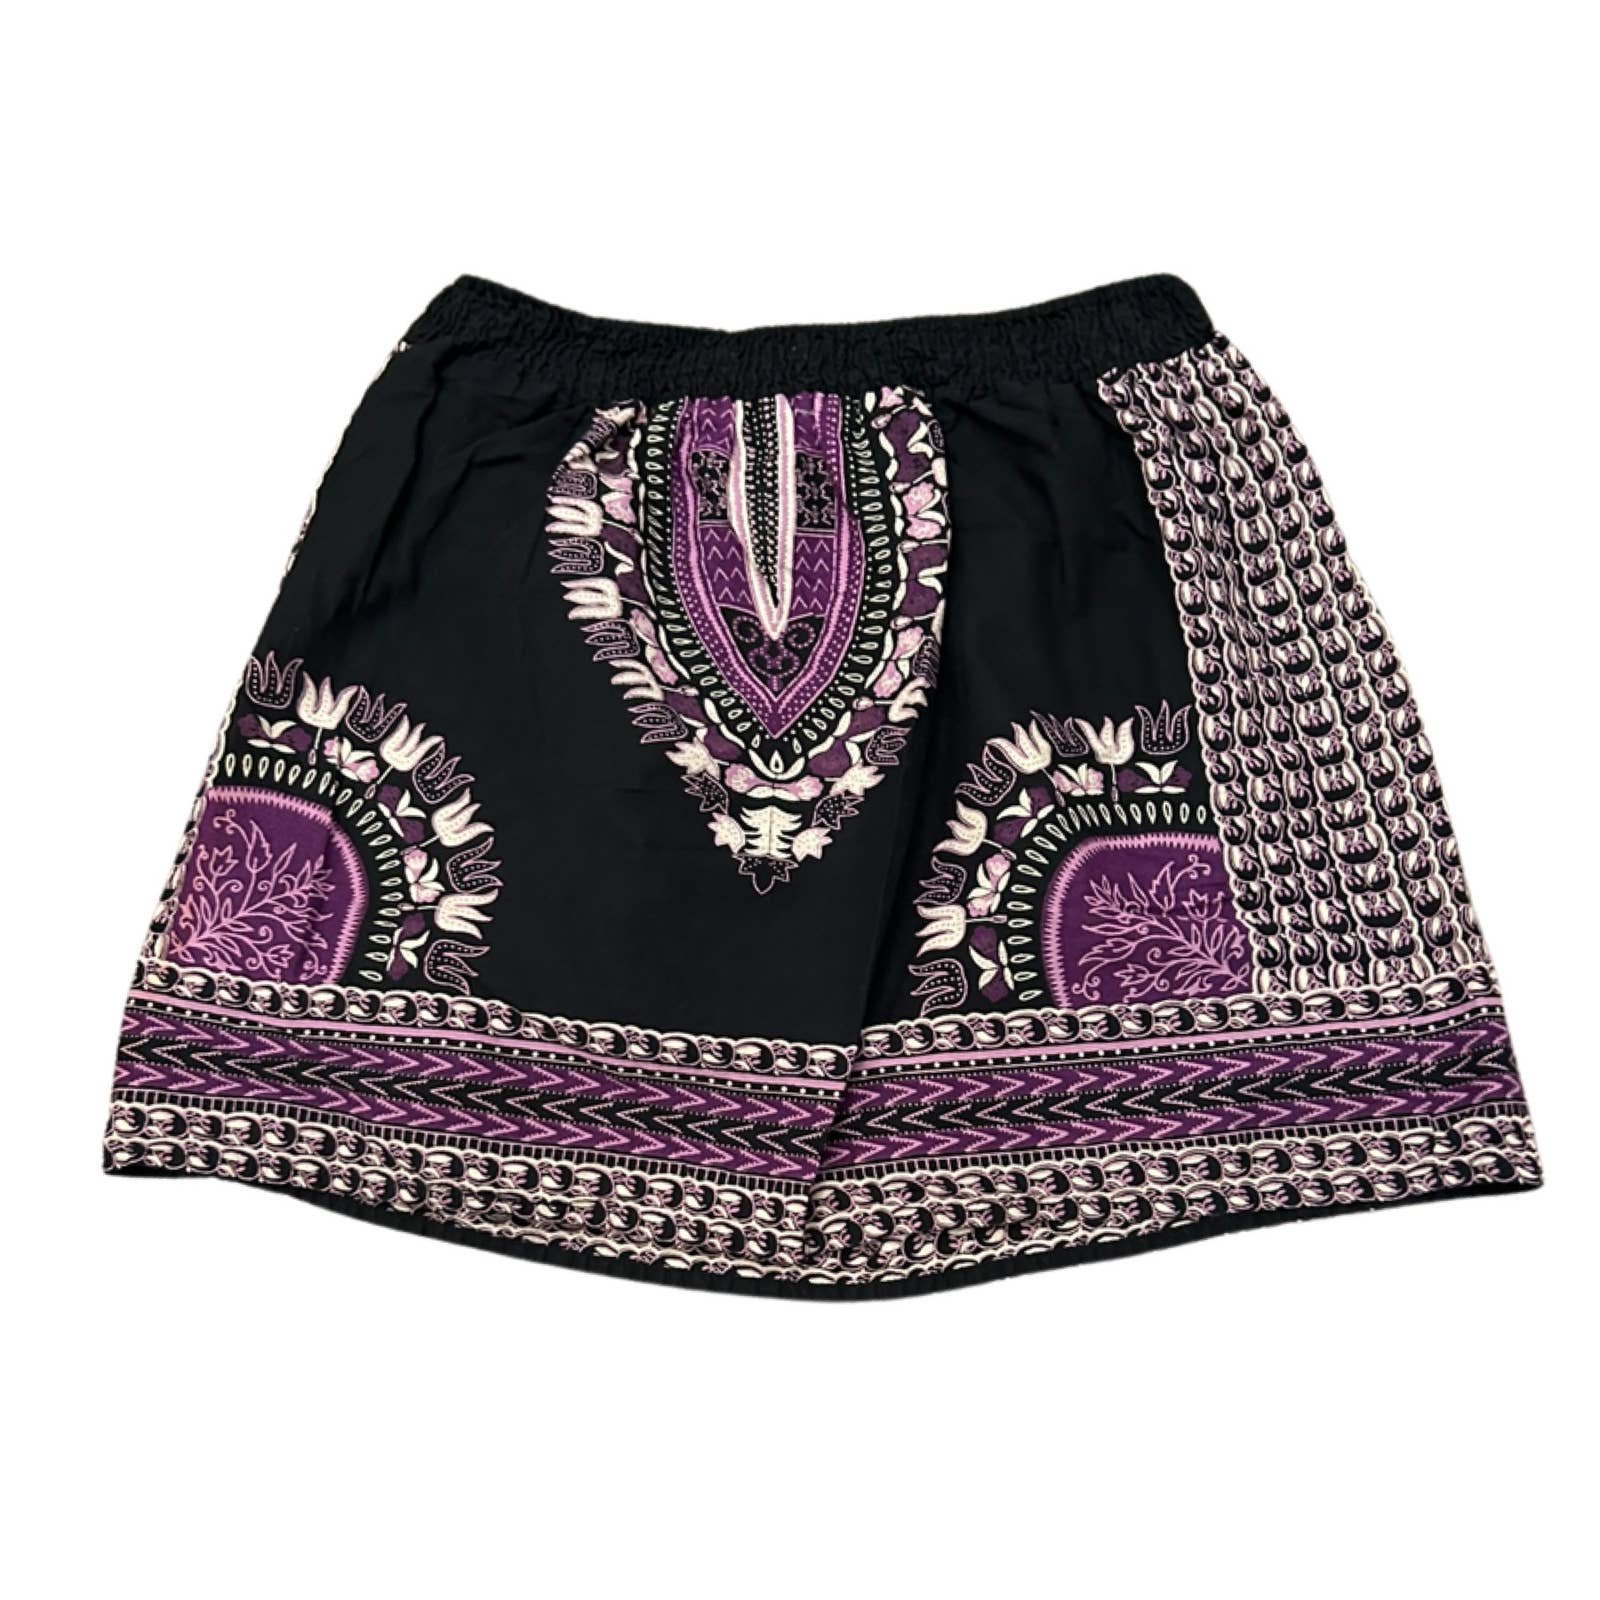 Beautiful Cotton Mini Skirt with Vibrant Print Perfect 